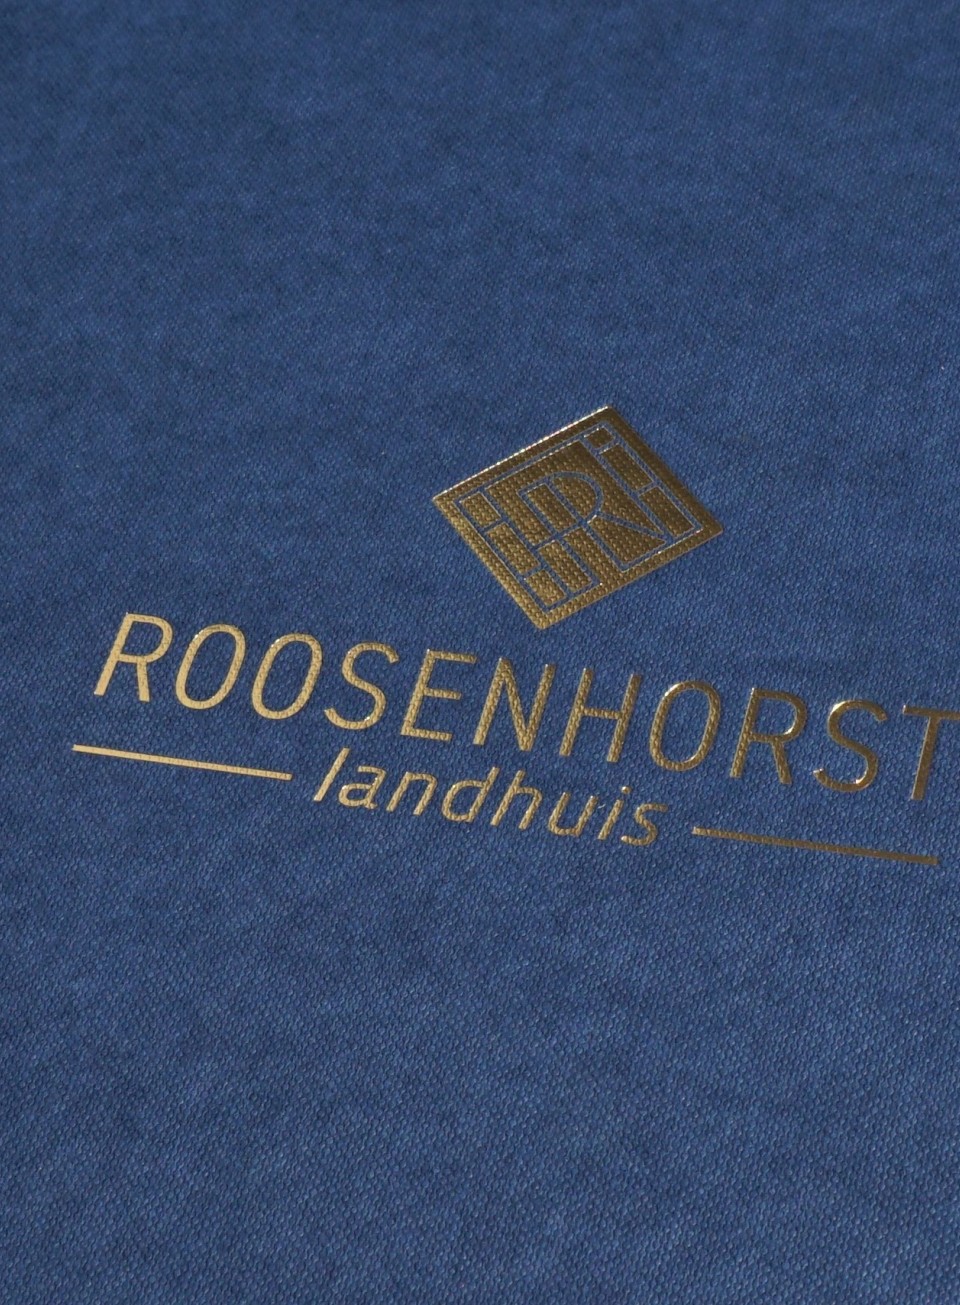 Roosenhorst